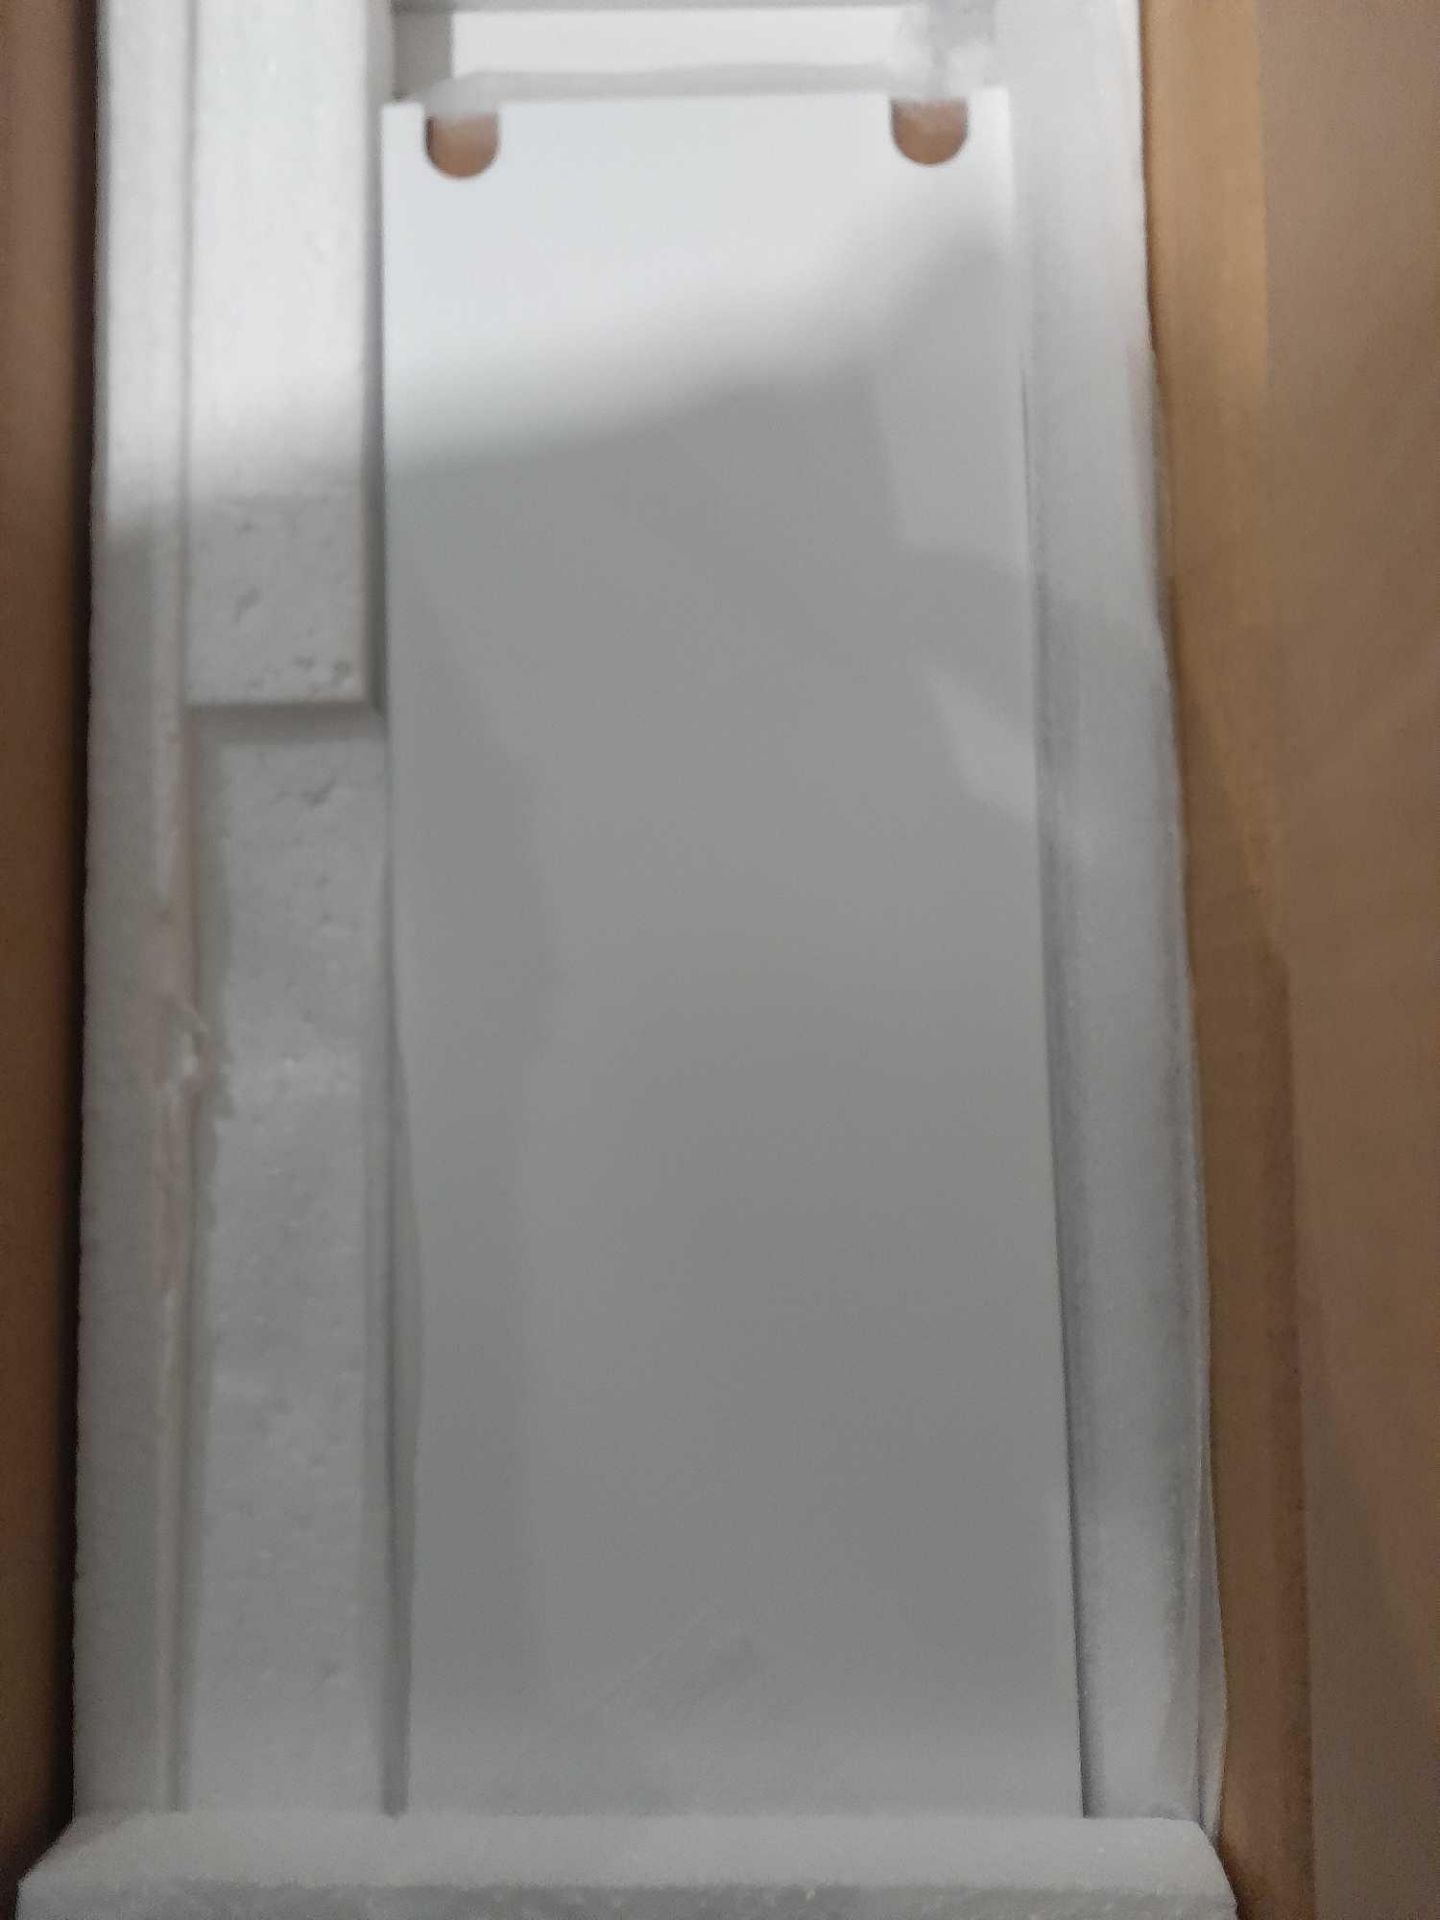 RRP £100 Boxed John Lewis Single Door White Cabinet - Image 2 of 3